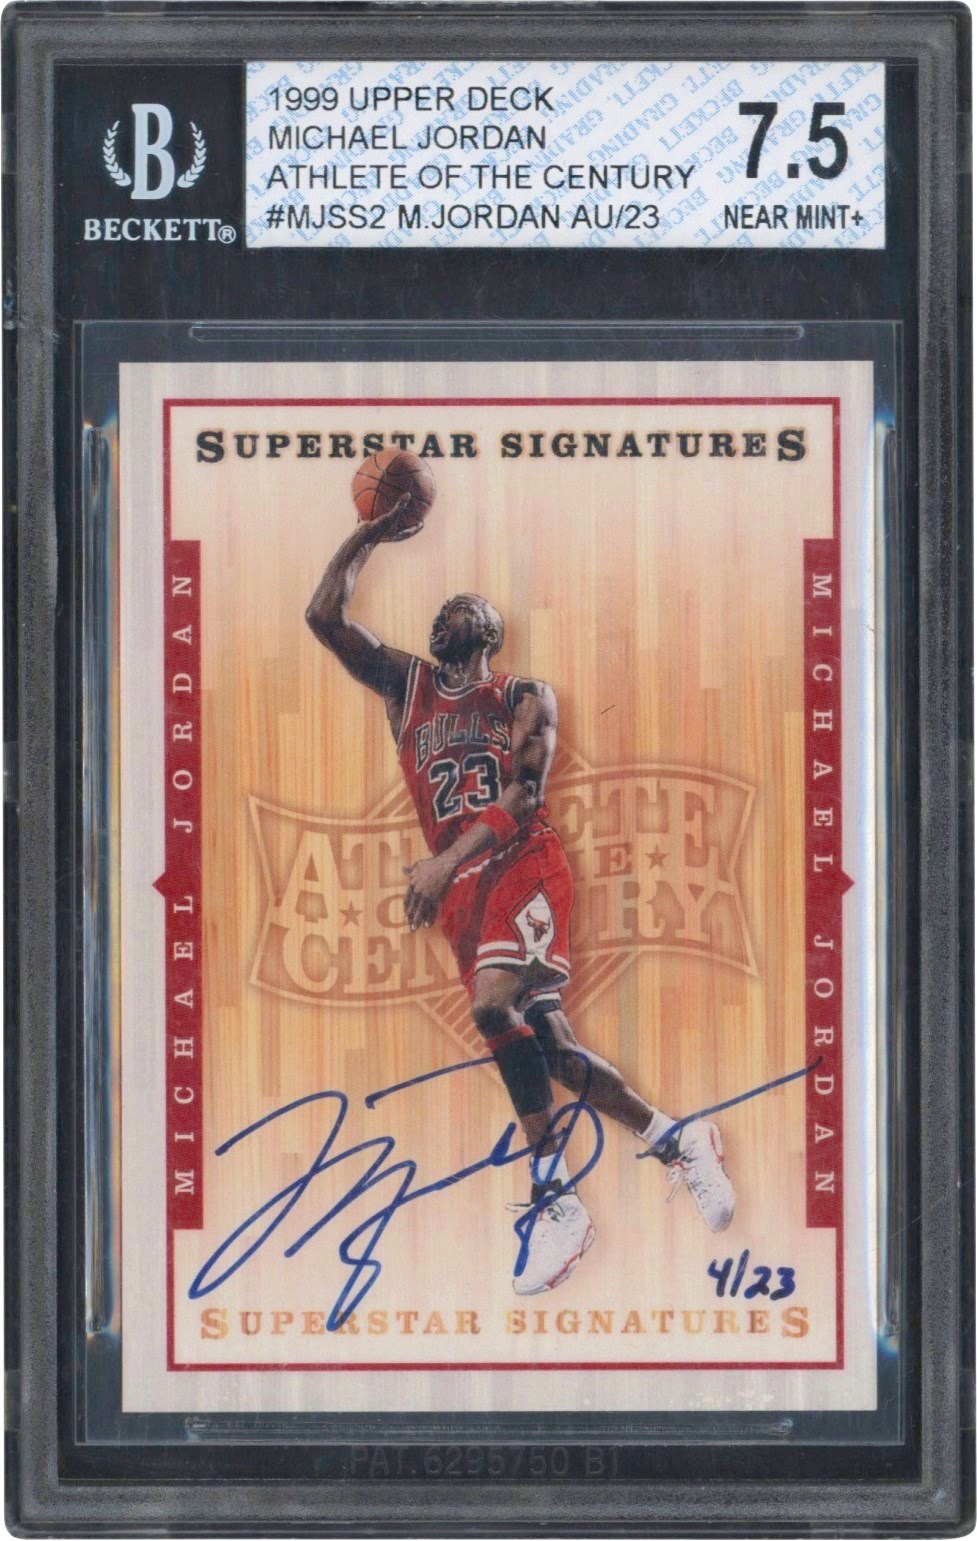 - 1999 Upper Deck Athlete of the Century Superstar Signatures #MJSS2 Michael Jordan Autograph Card #4/23 BGS NM+ 7.5